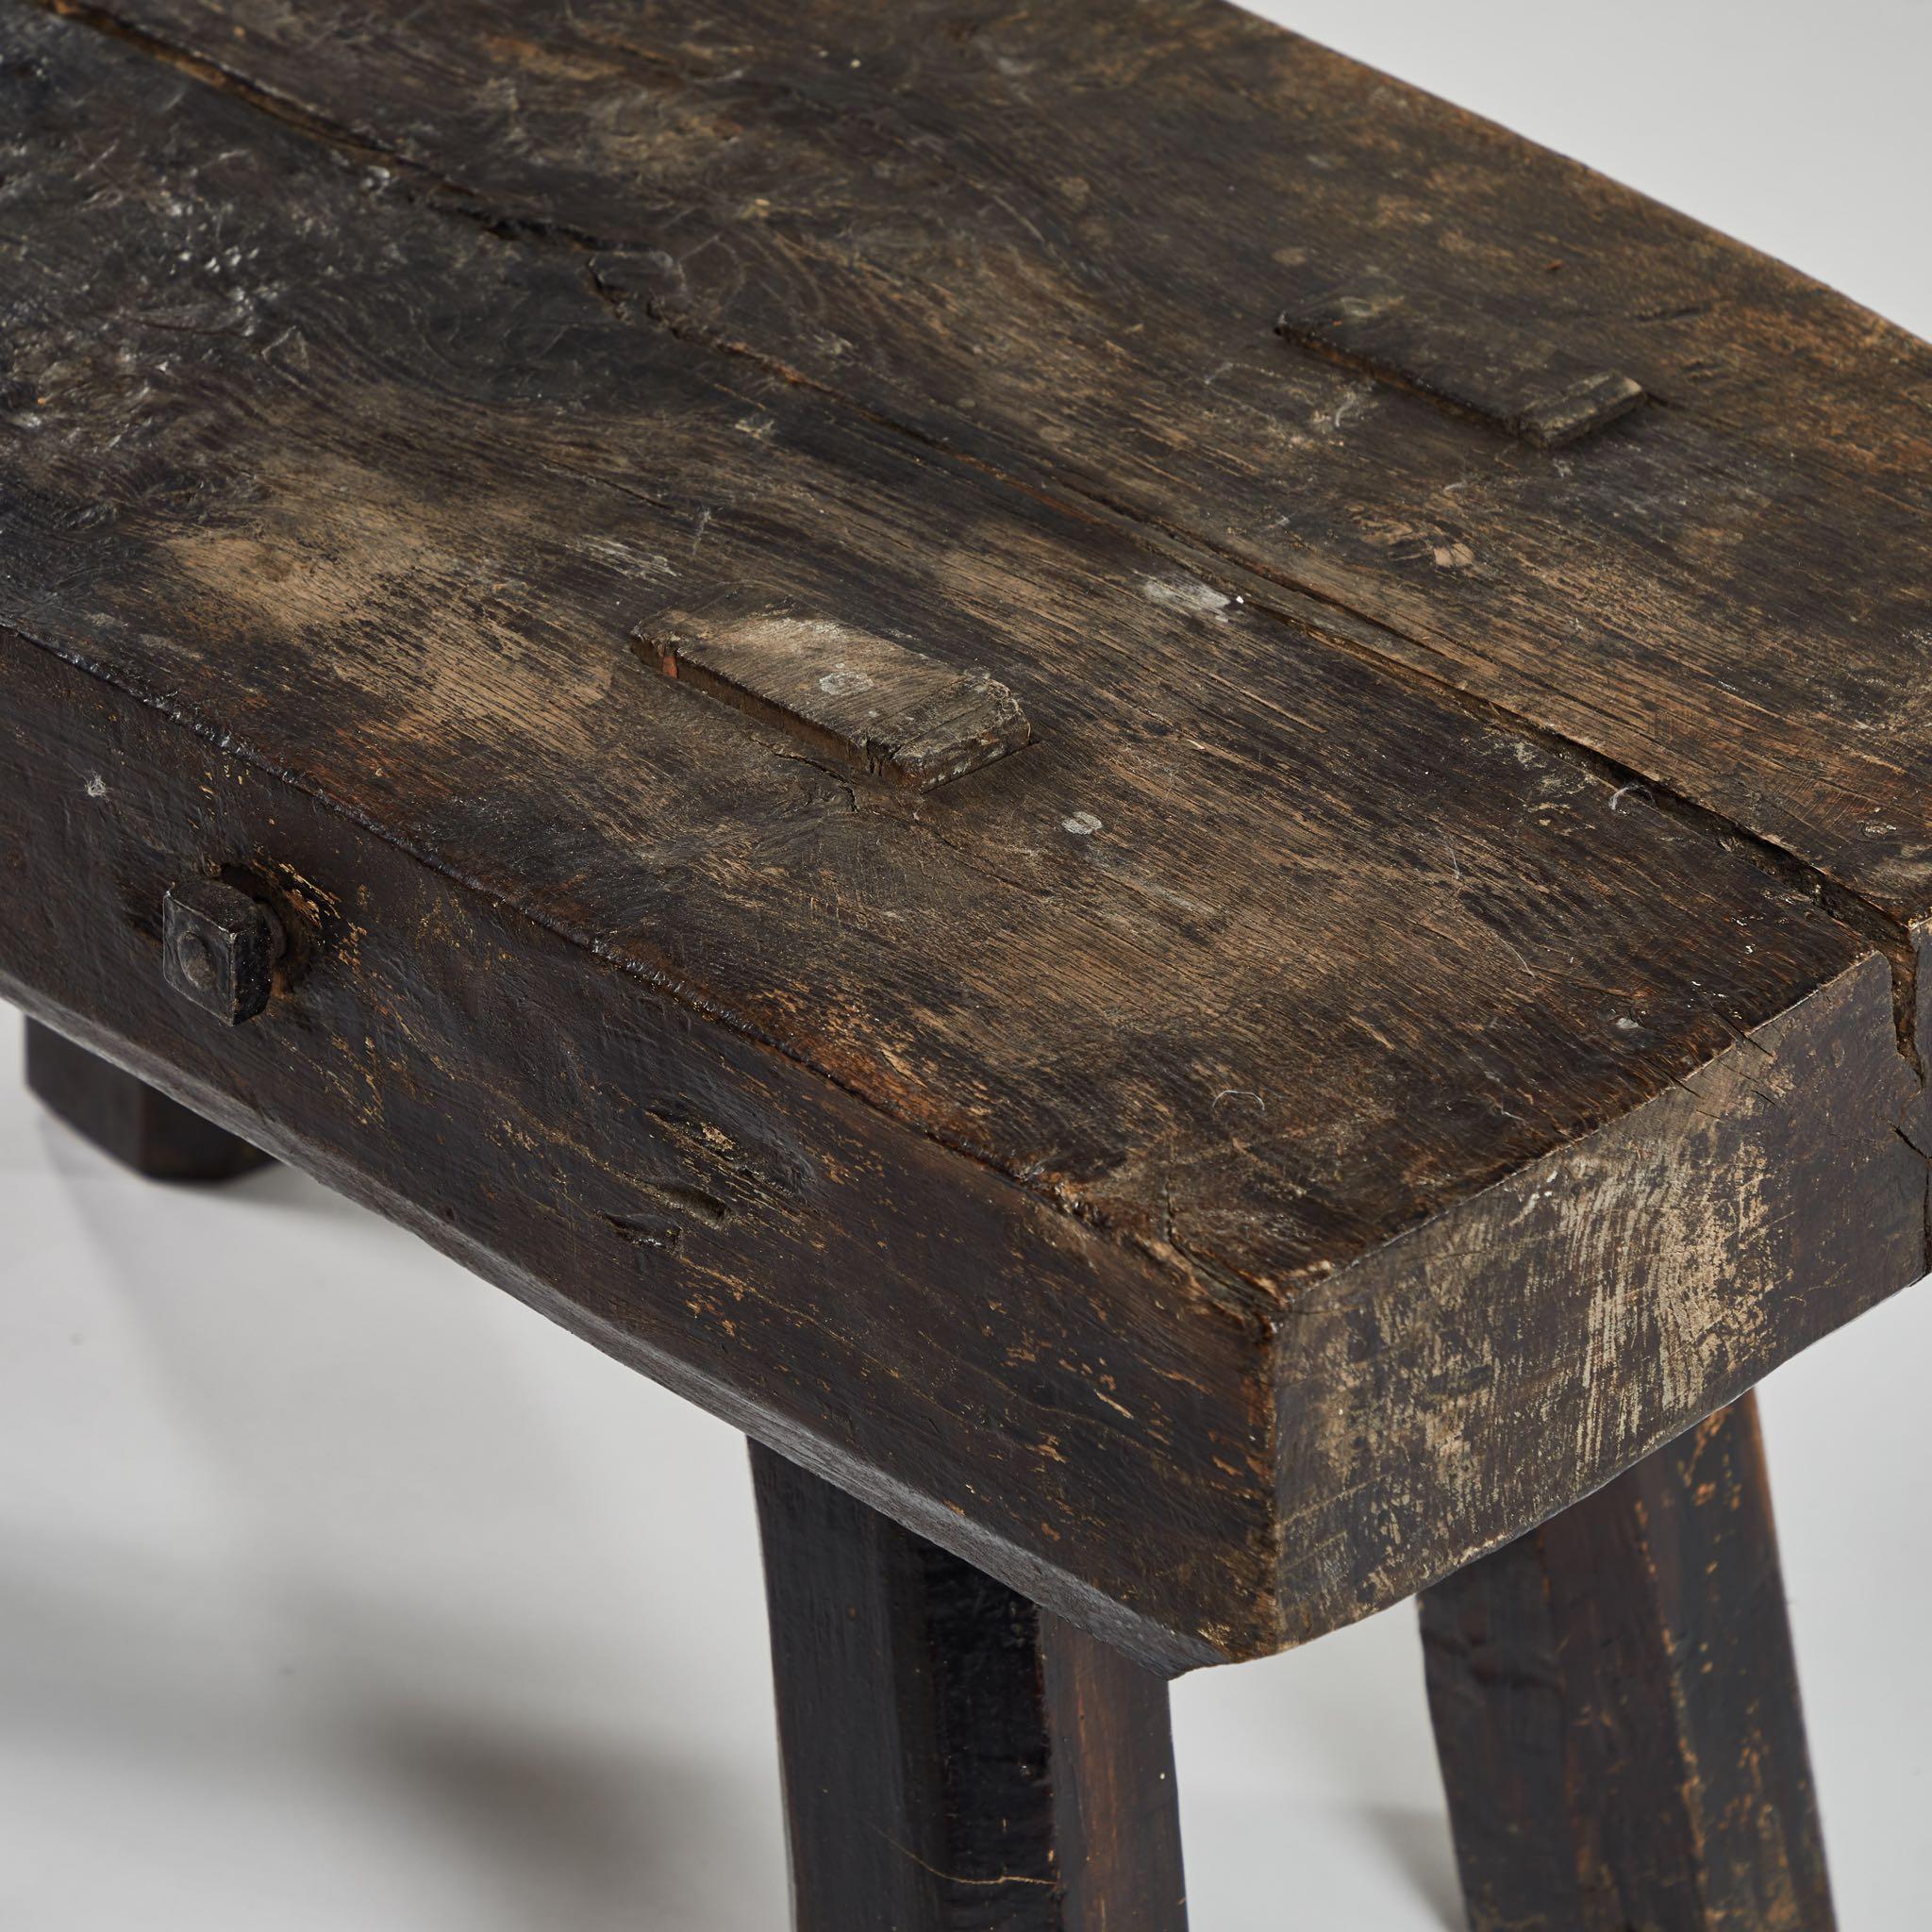 A rustic bench or coffee table, originating in England, circa 1880.